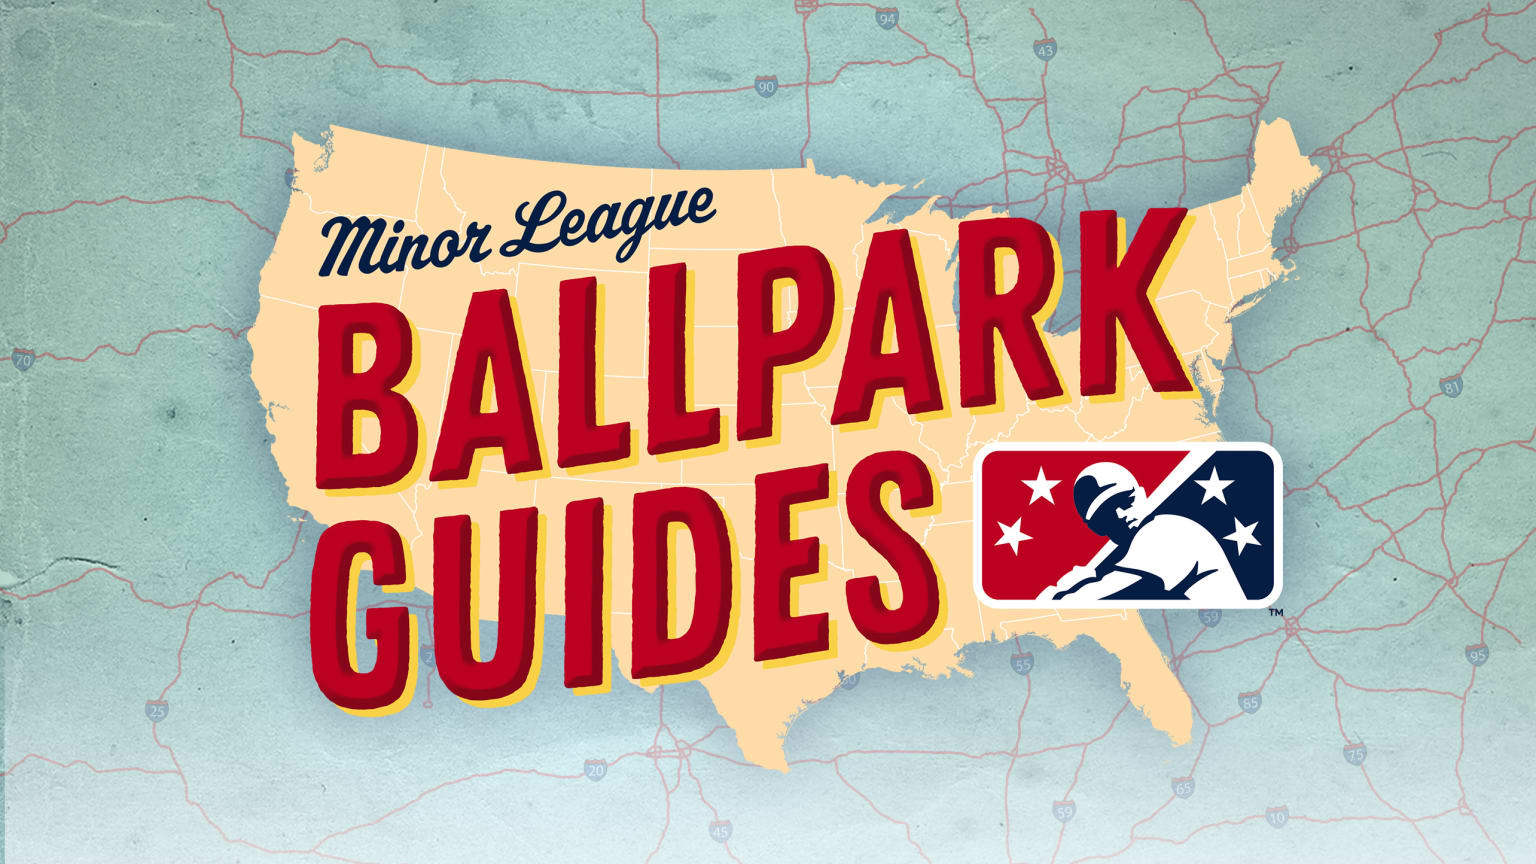 Ballpark Guides